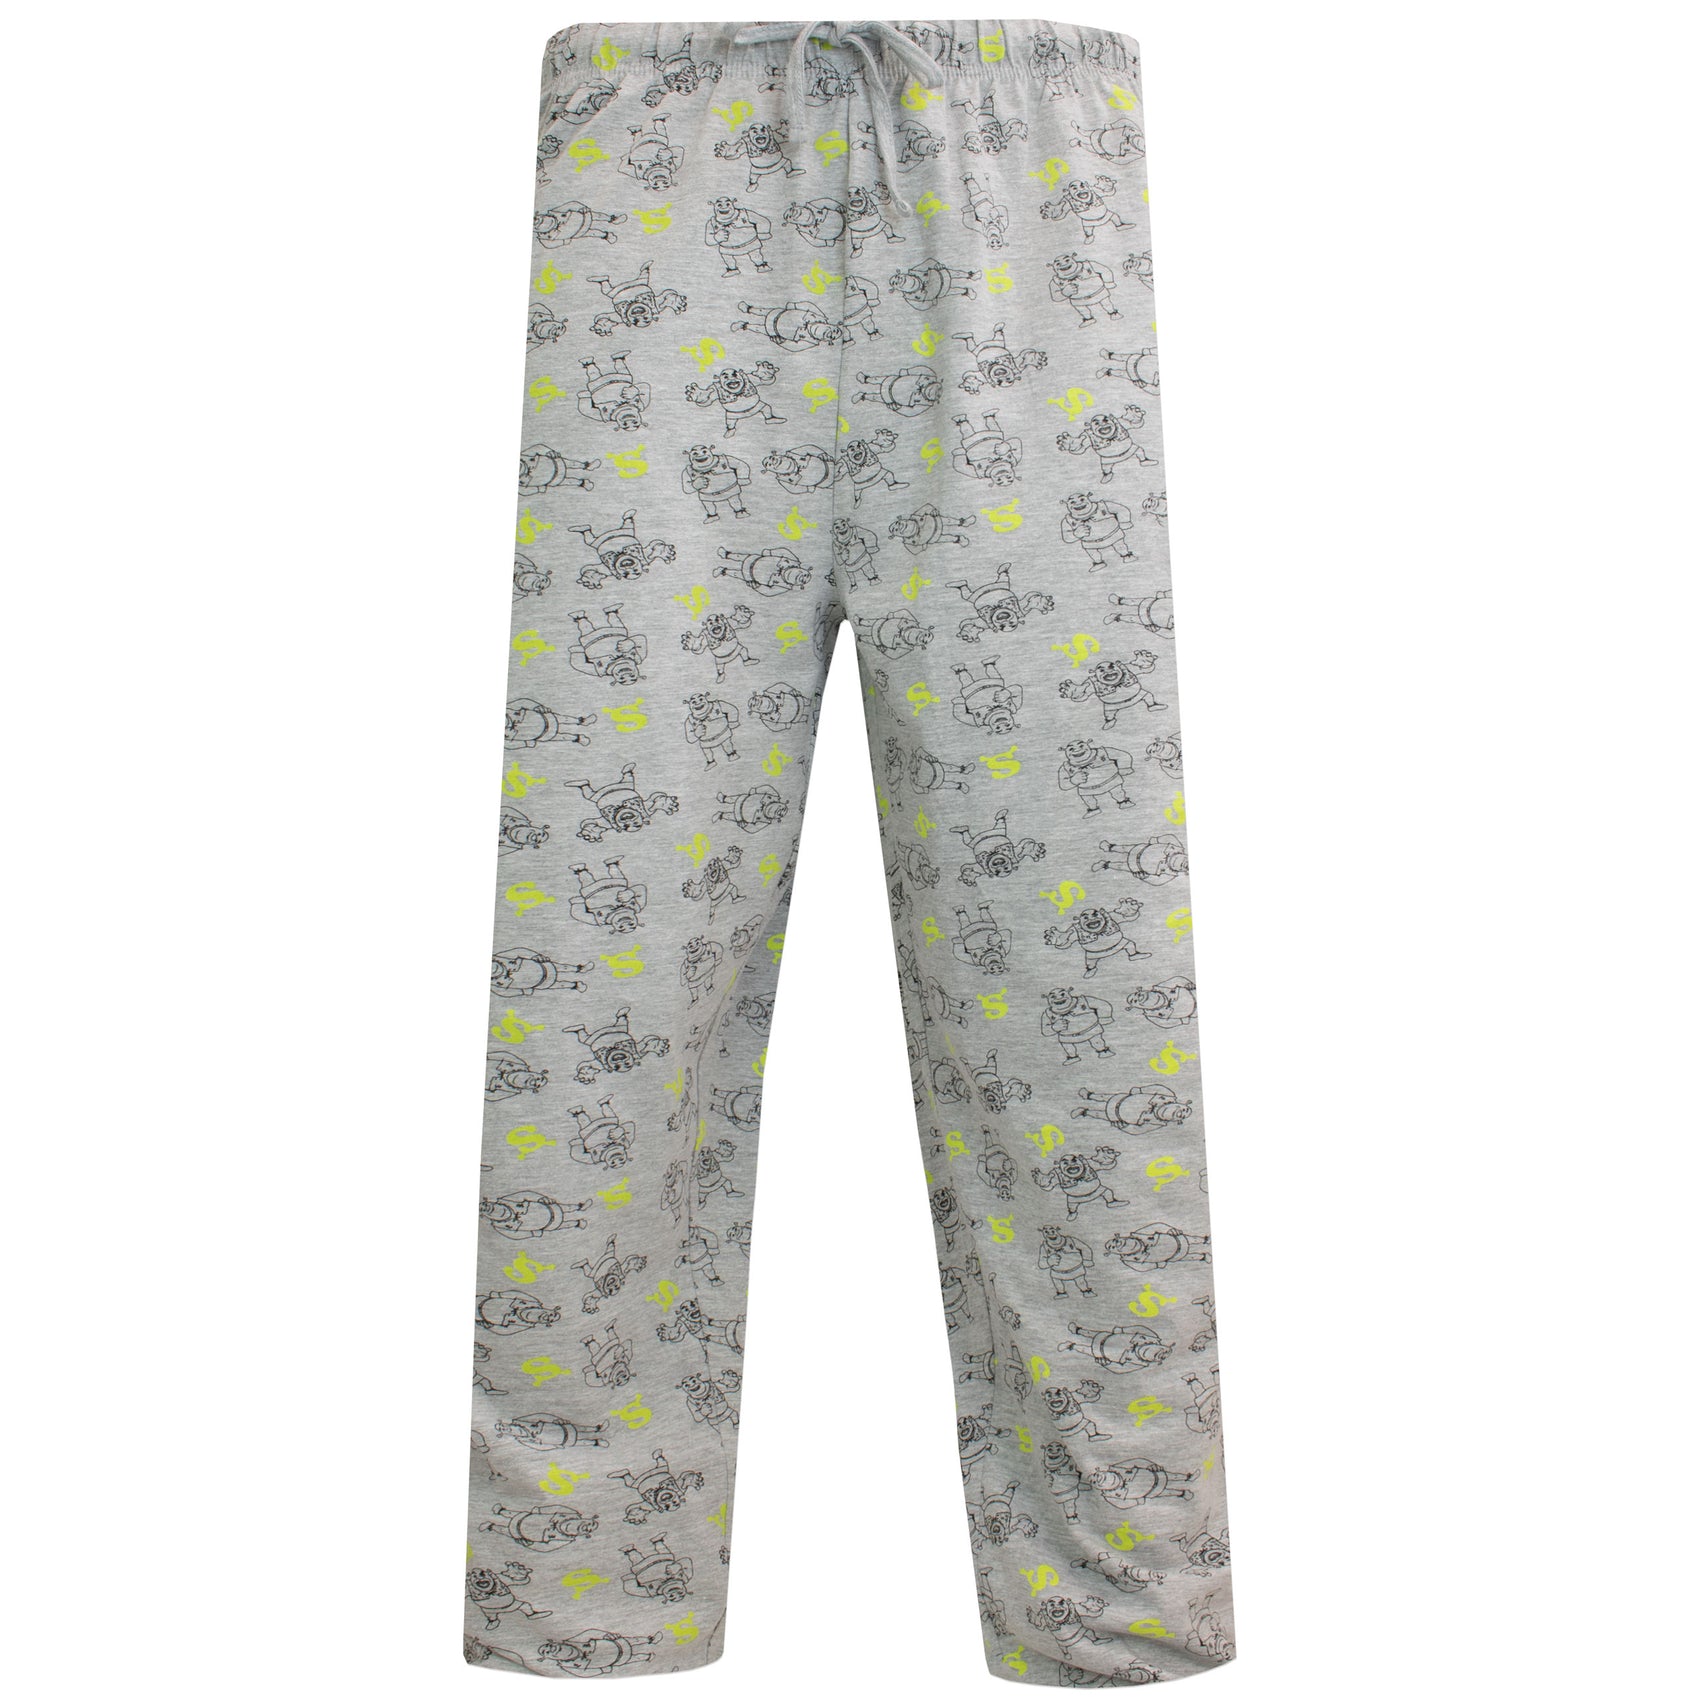 Buy Mens Shrek Pyjamas | Adults | Official Character.com Merchandise